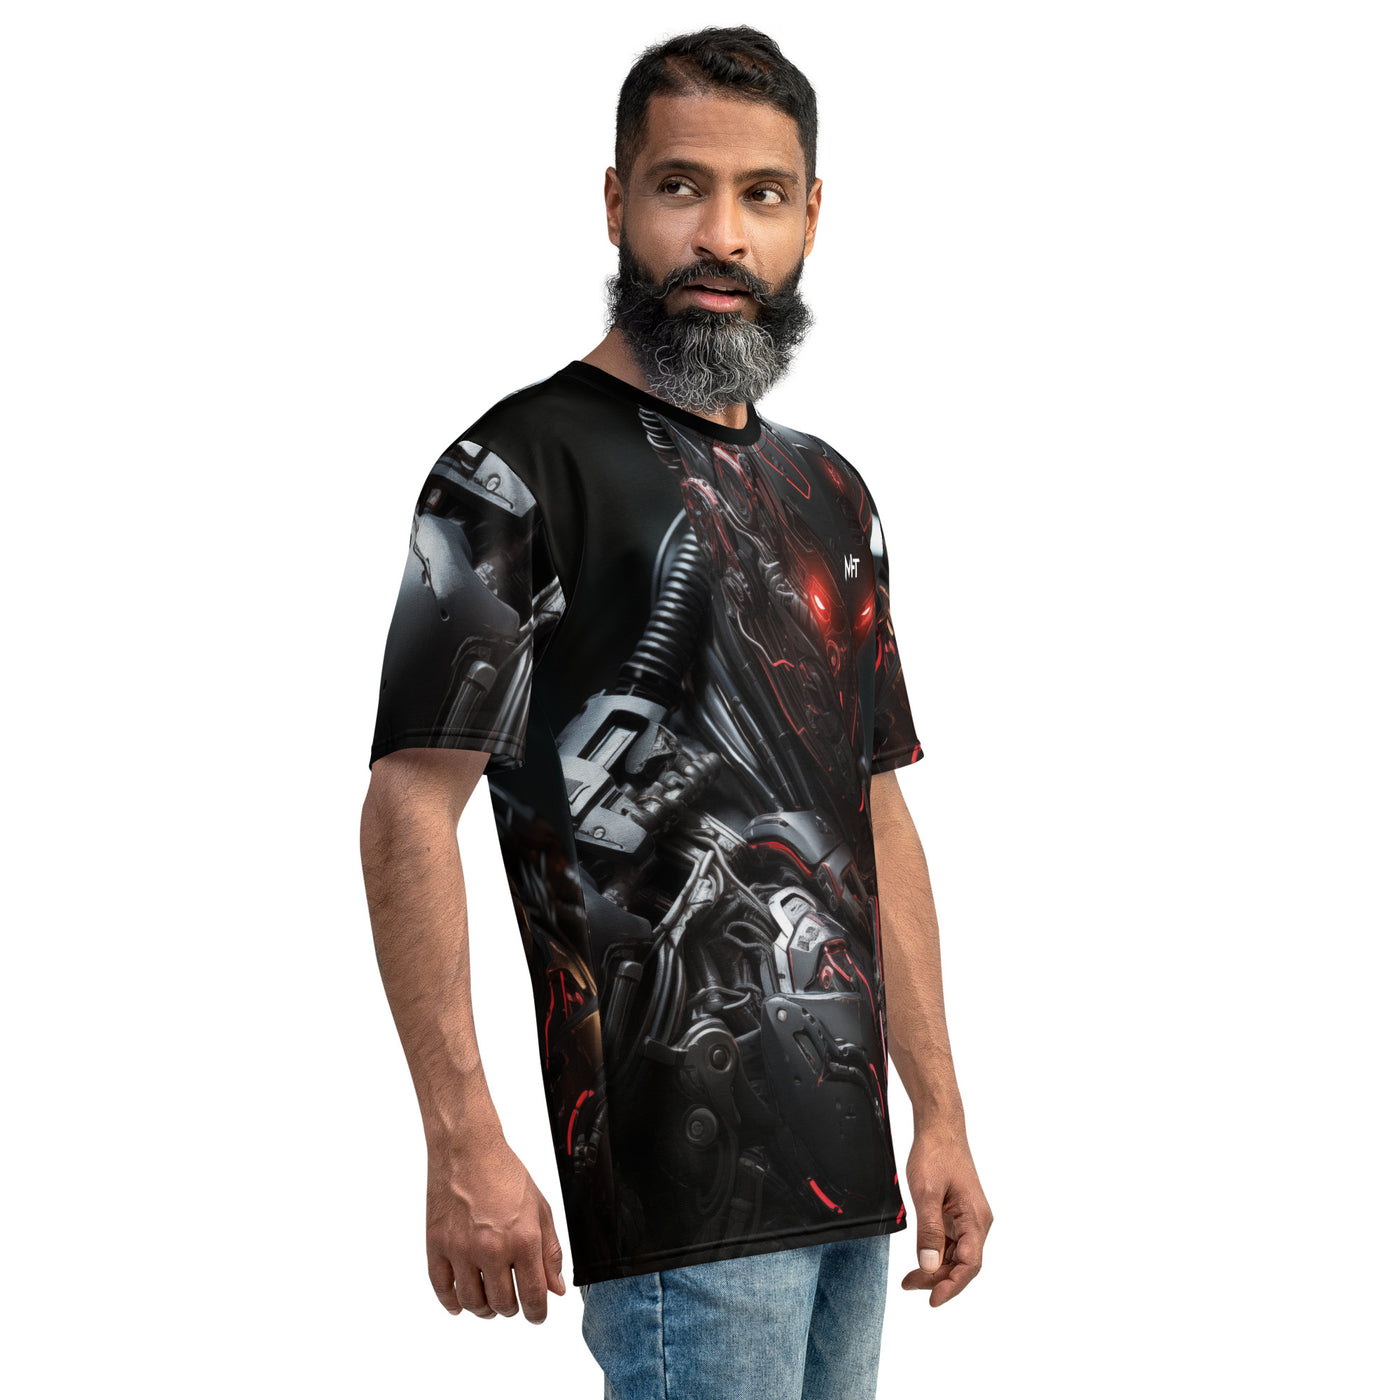 CyberArms Warrior v31 - Men's t-shirt